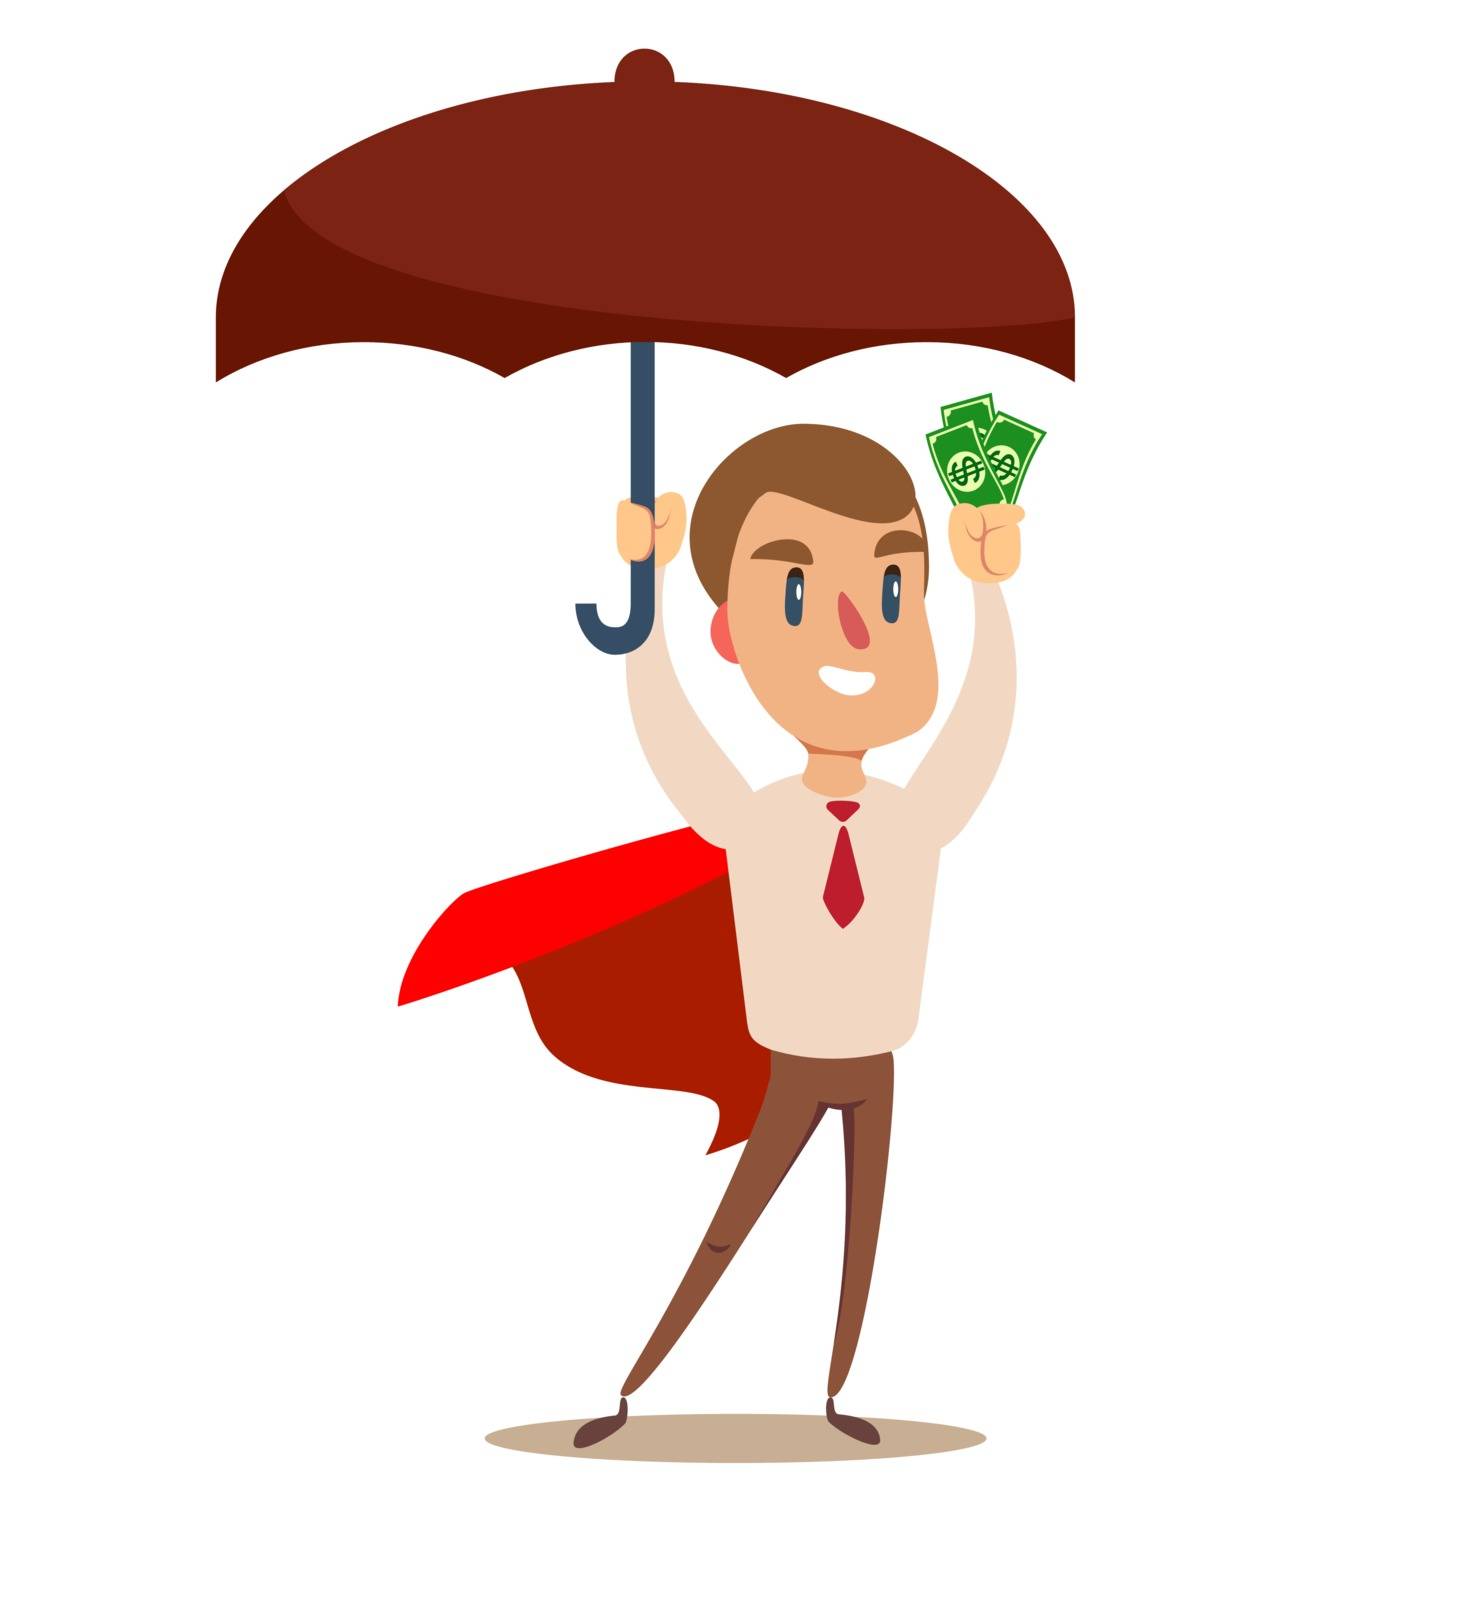 Superhero holding umbrella to protect money. by alekseiveprev